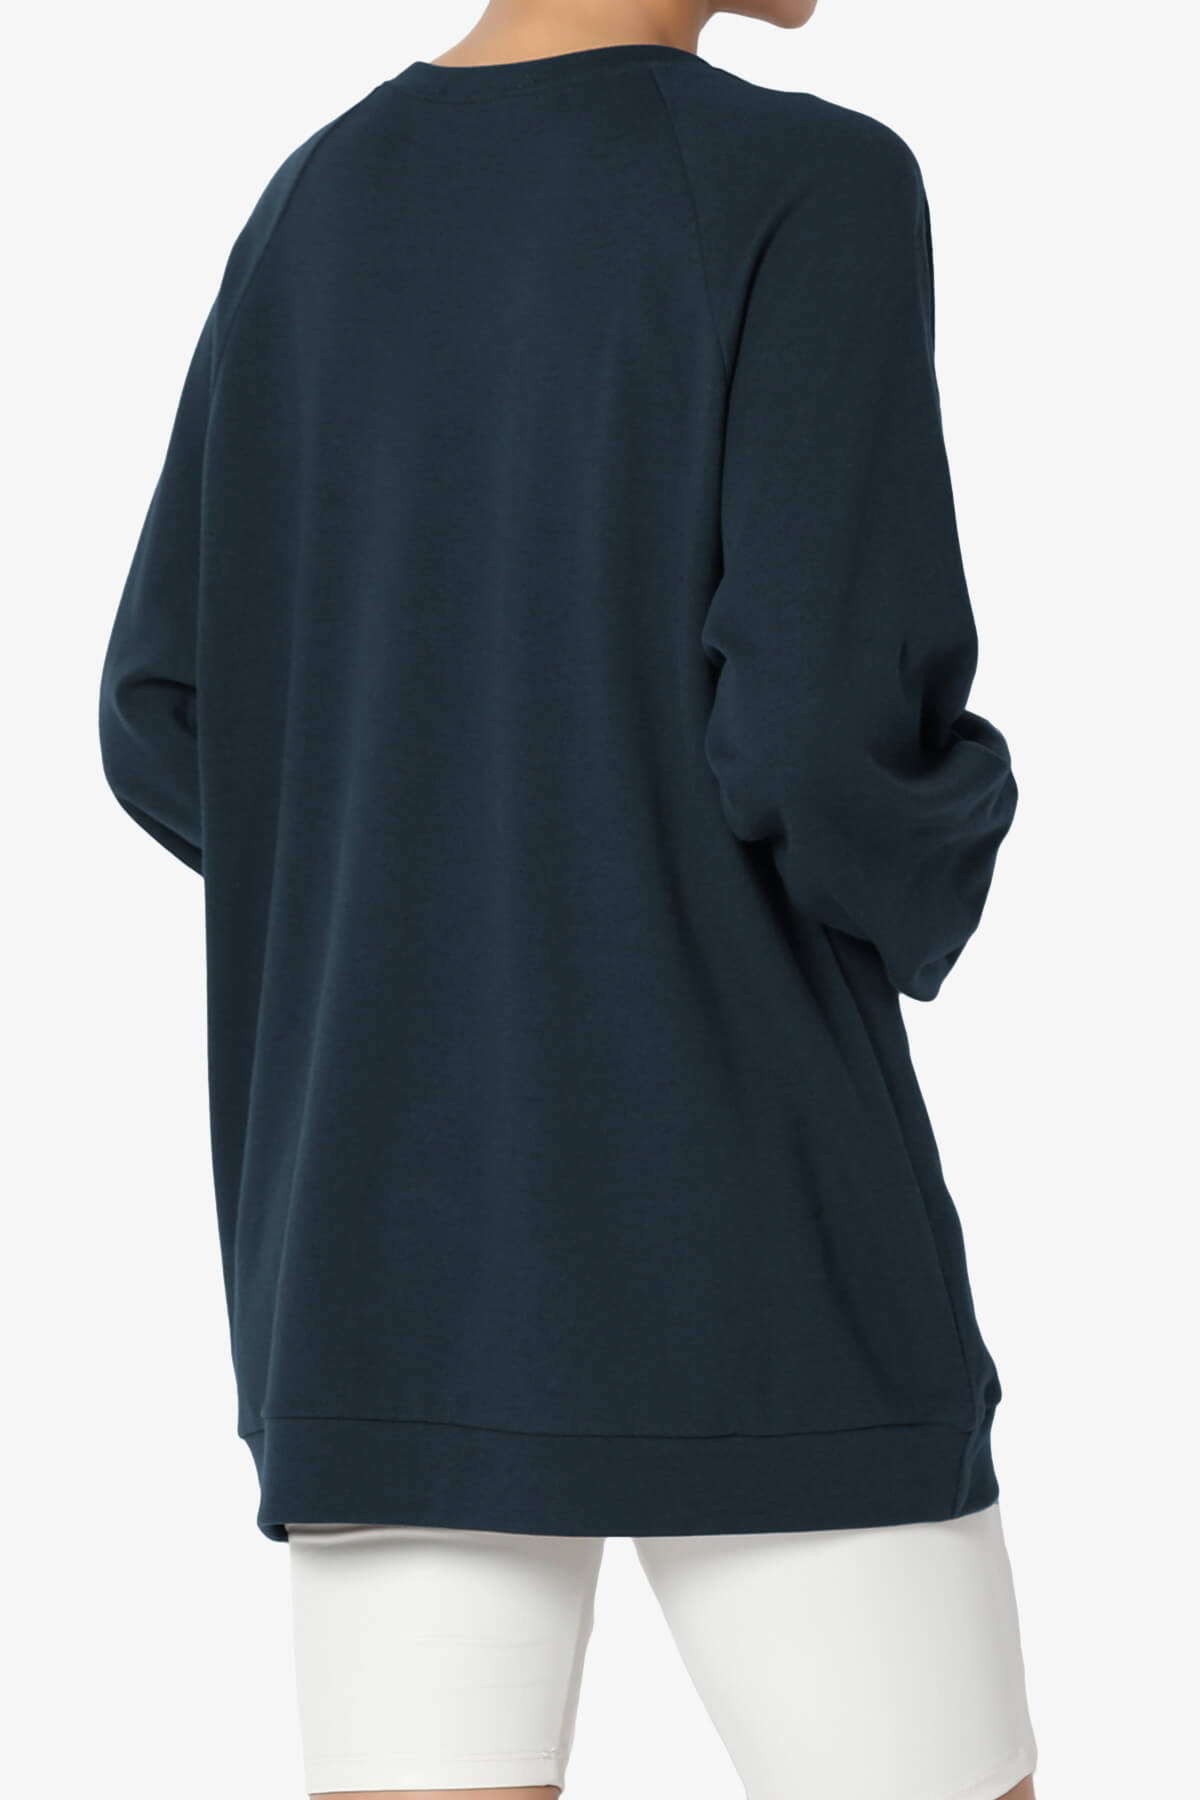 Carlene Cotton Raglan Sleeve Pullover Top DARK NAVY_4